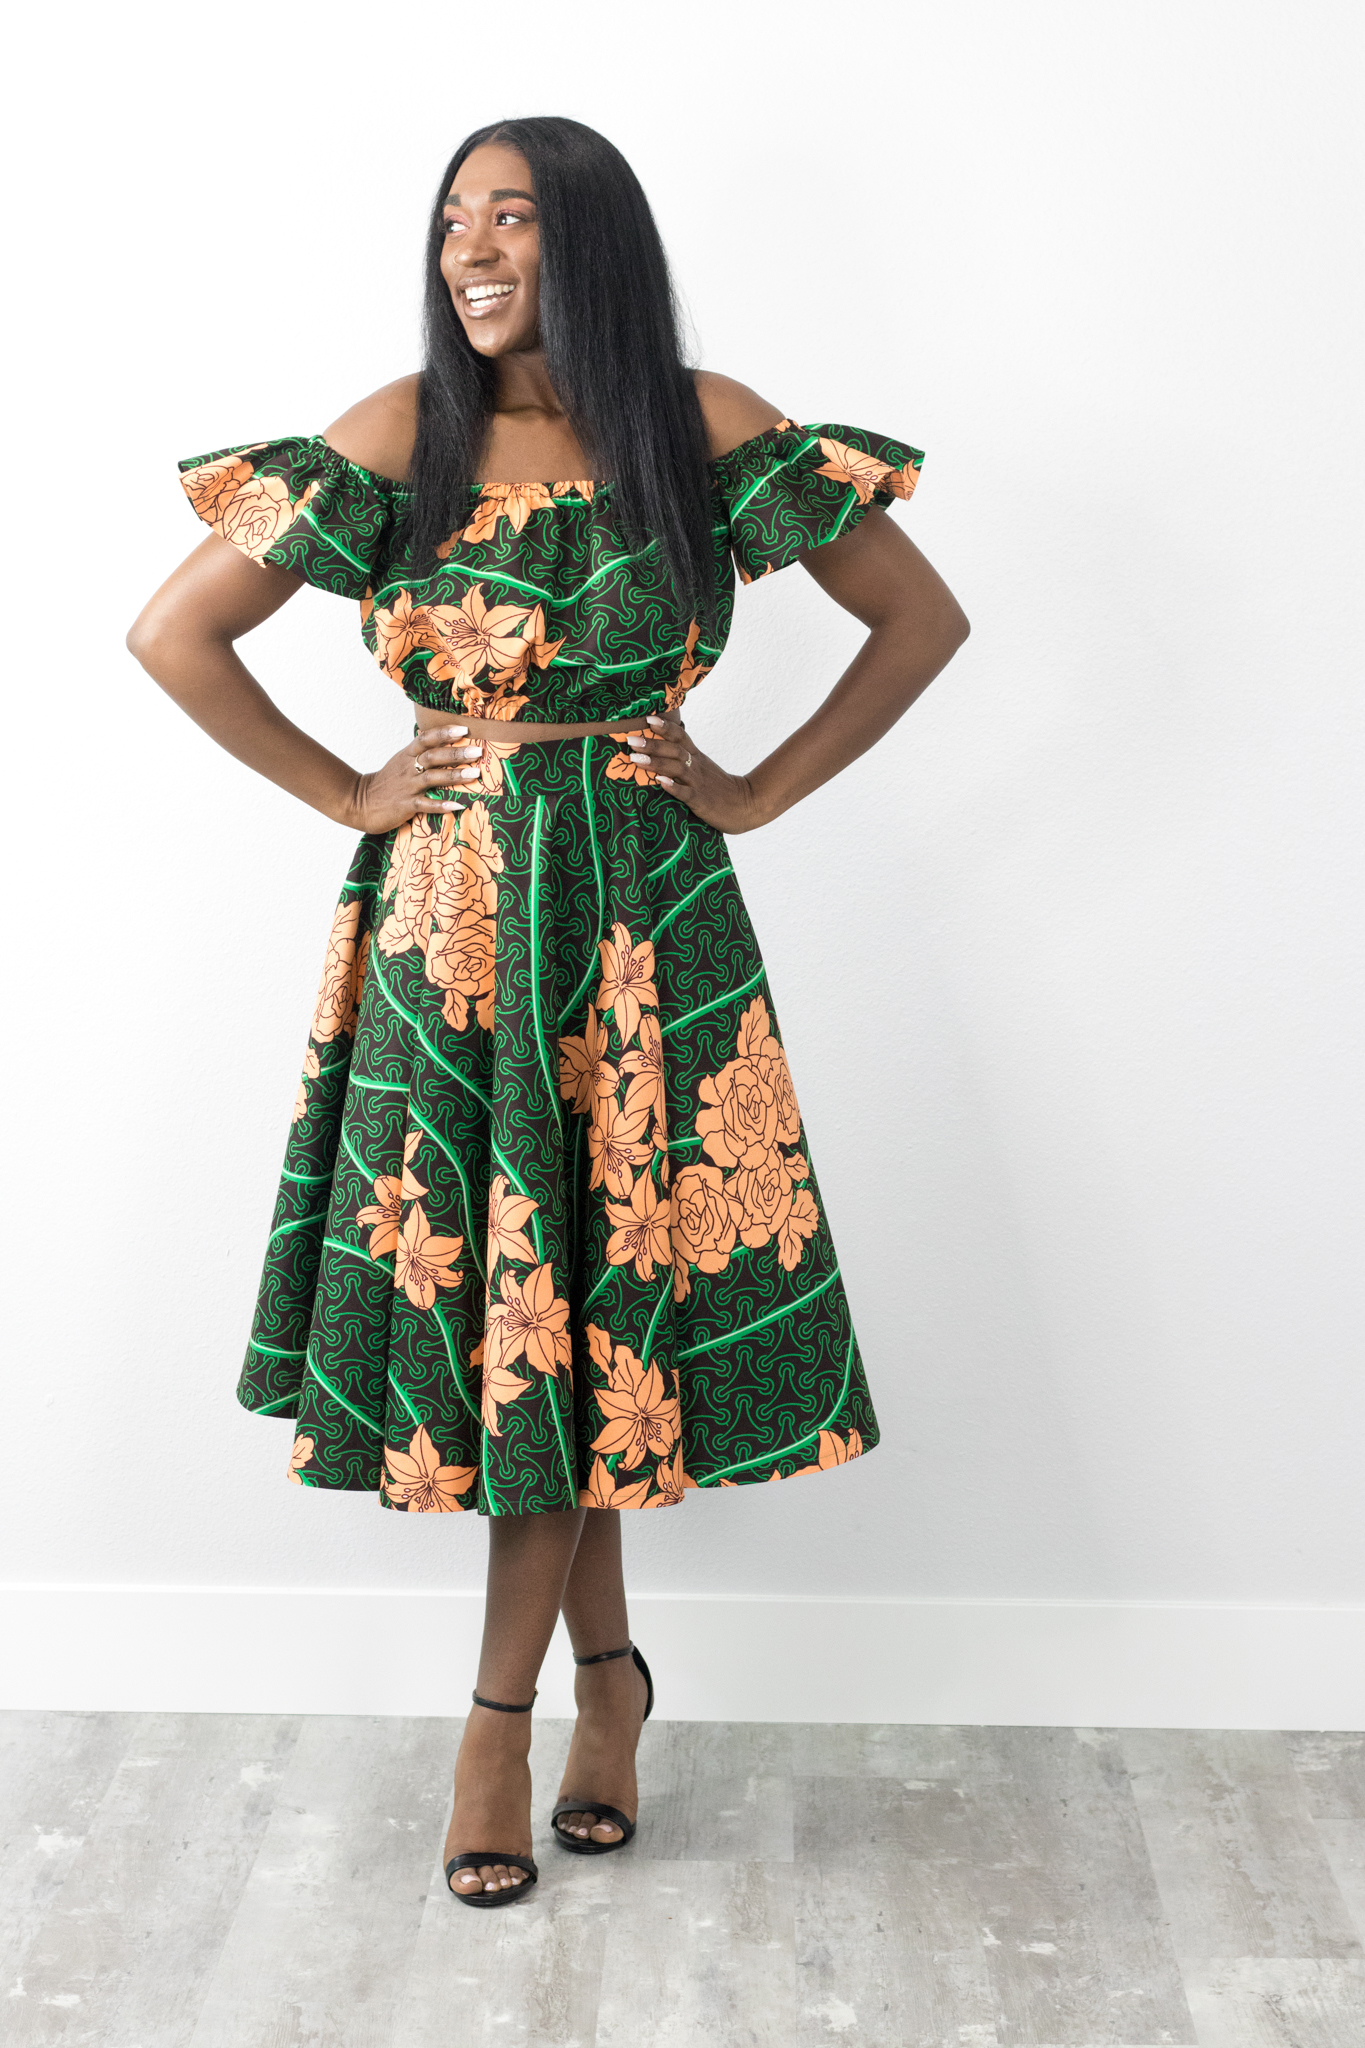 DIY Flat Front Elastic Back Full Circle Skirt Midi crop top Ankara African Print Fabric Tutorial Pockets